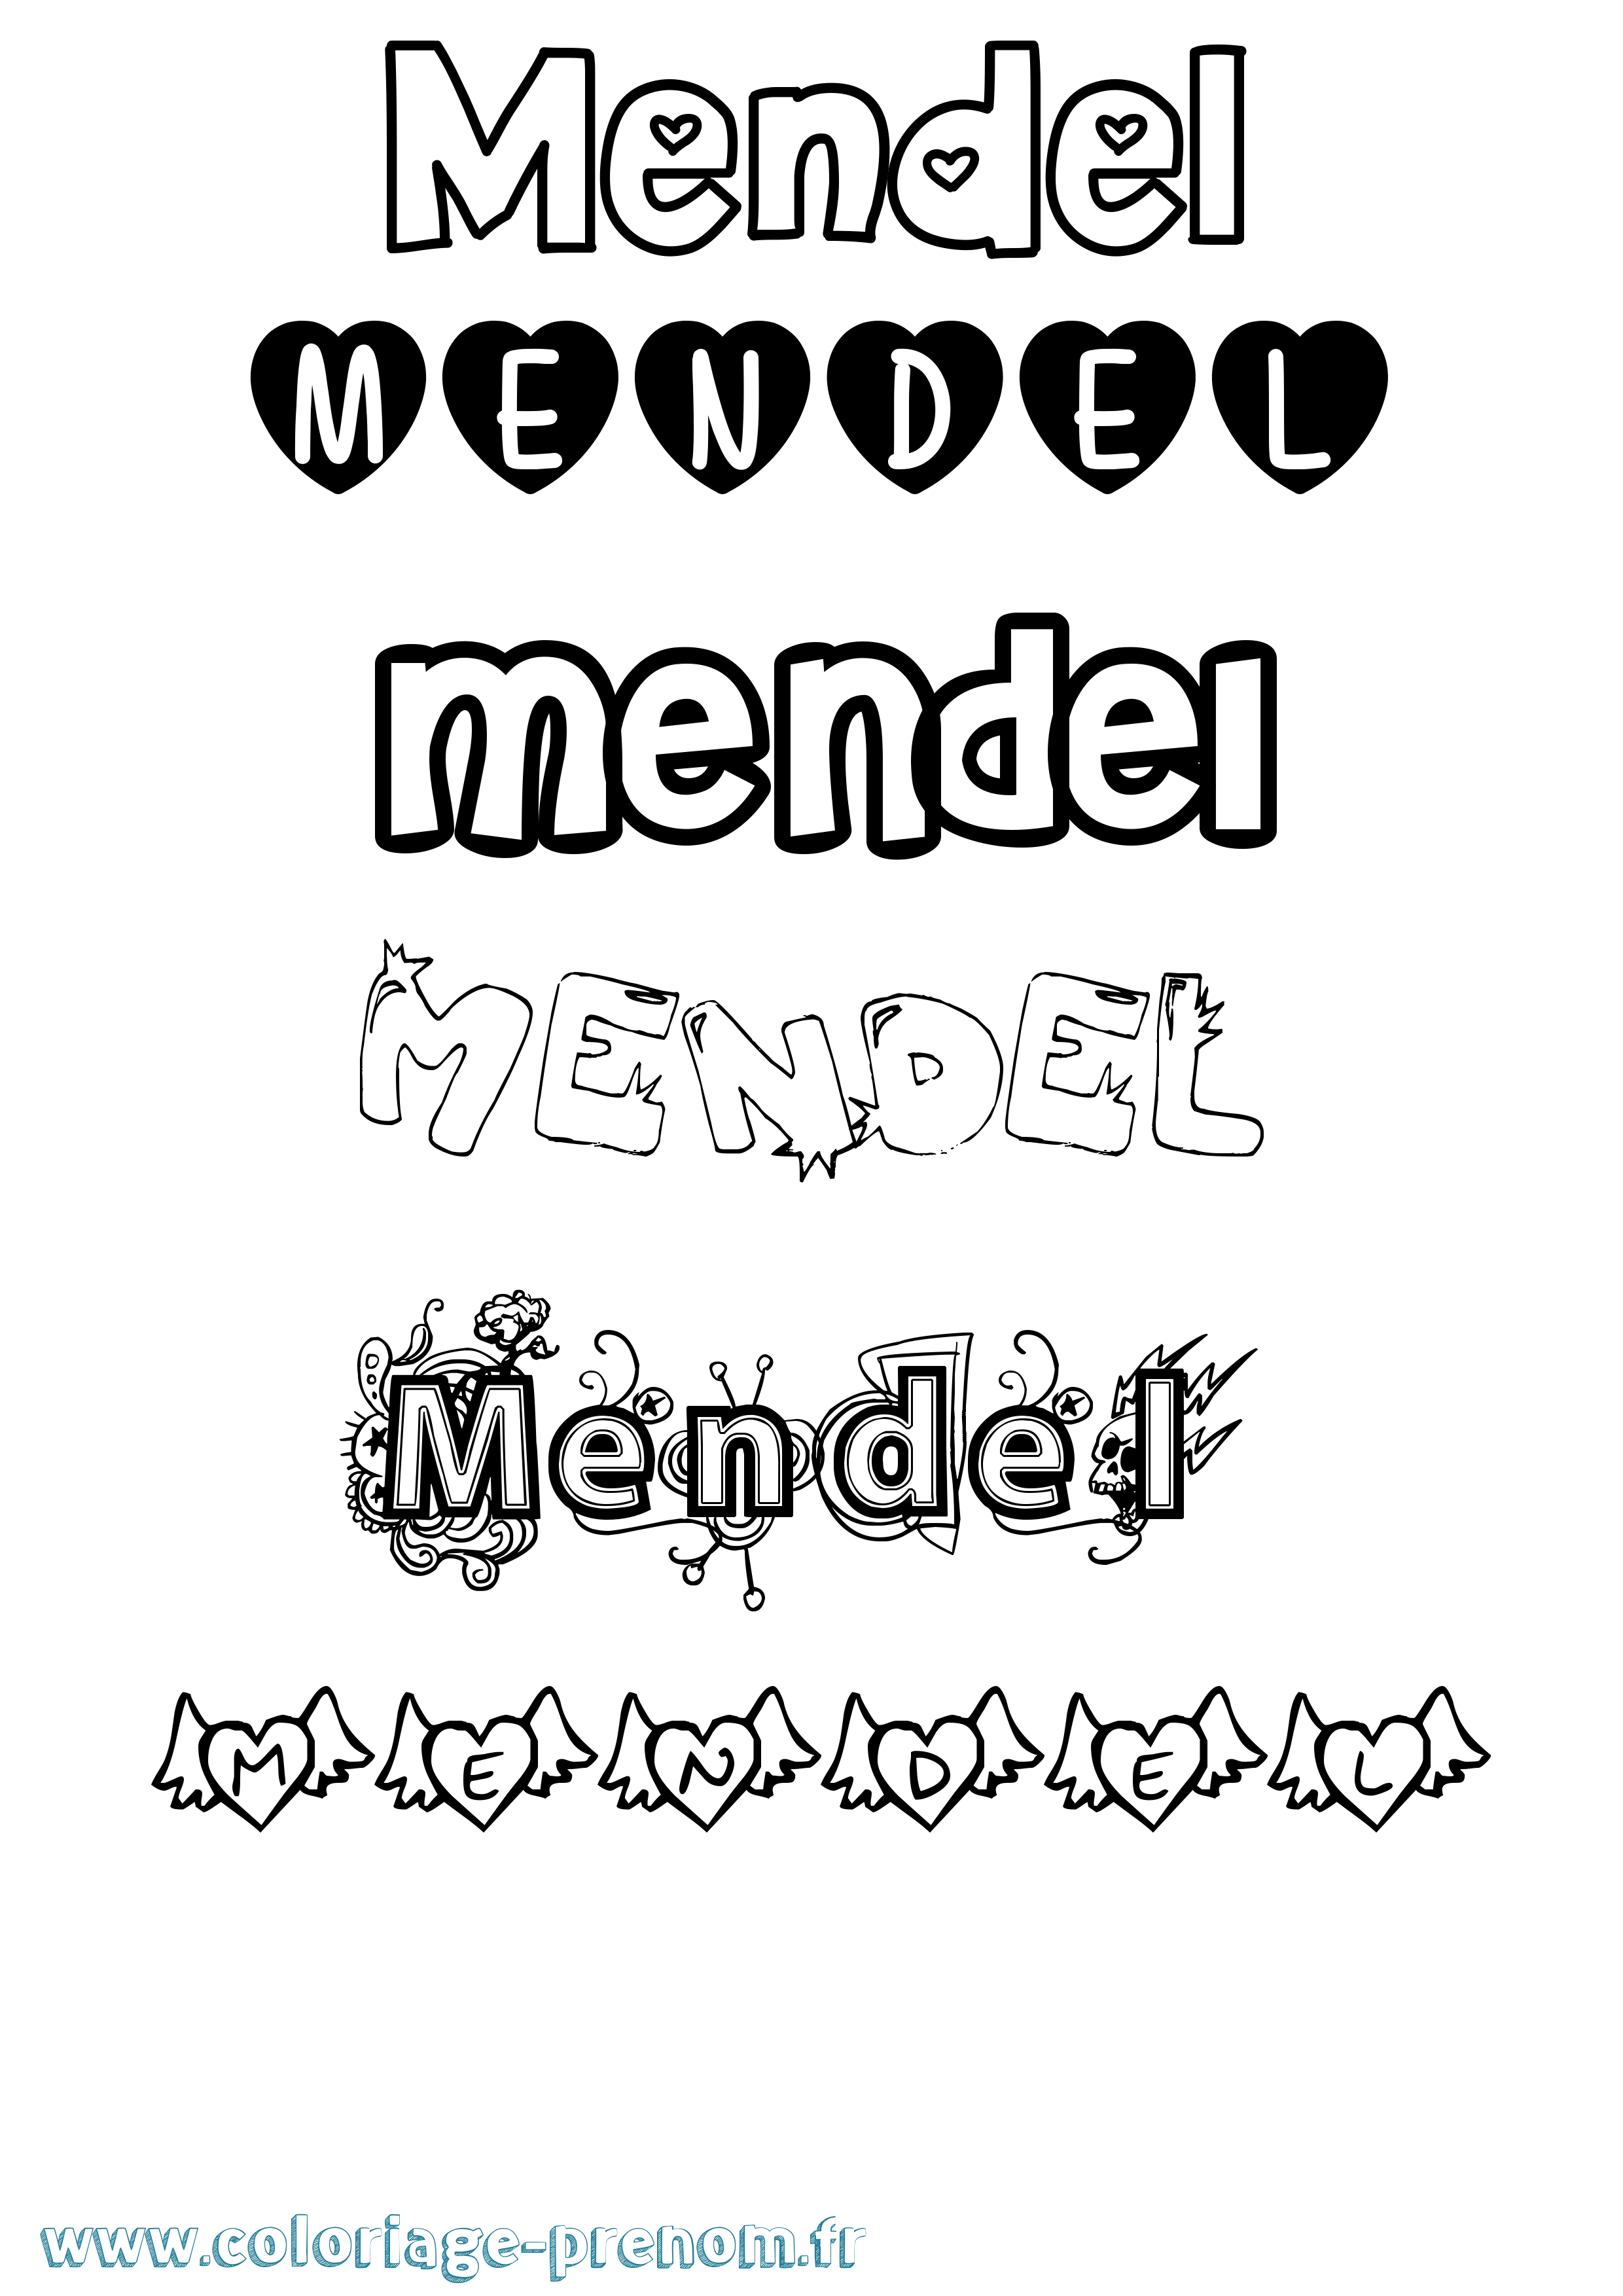 Coloriage prénom Mendel